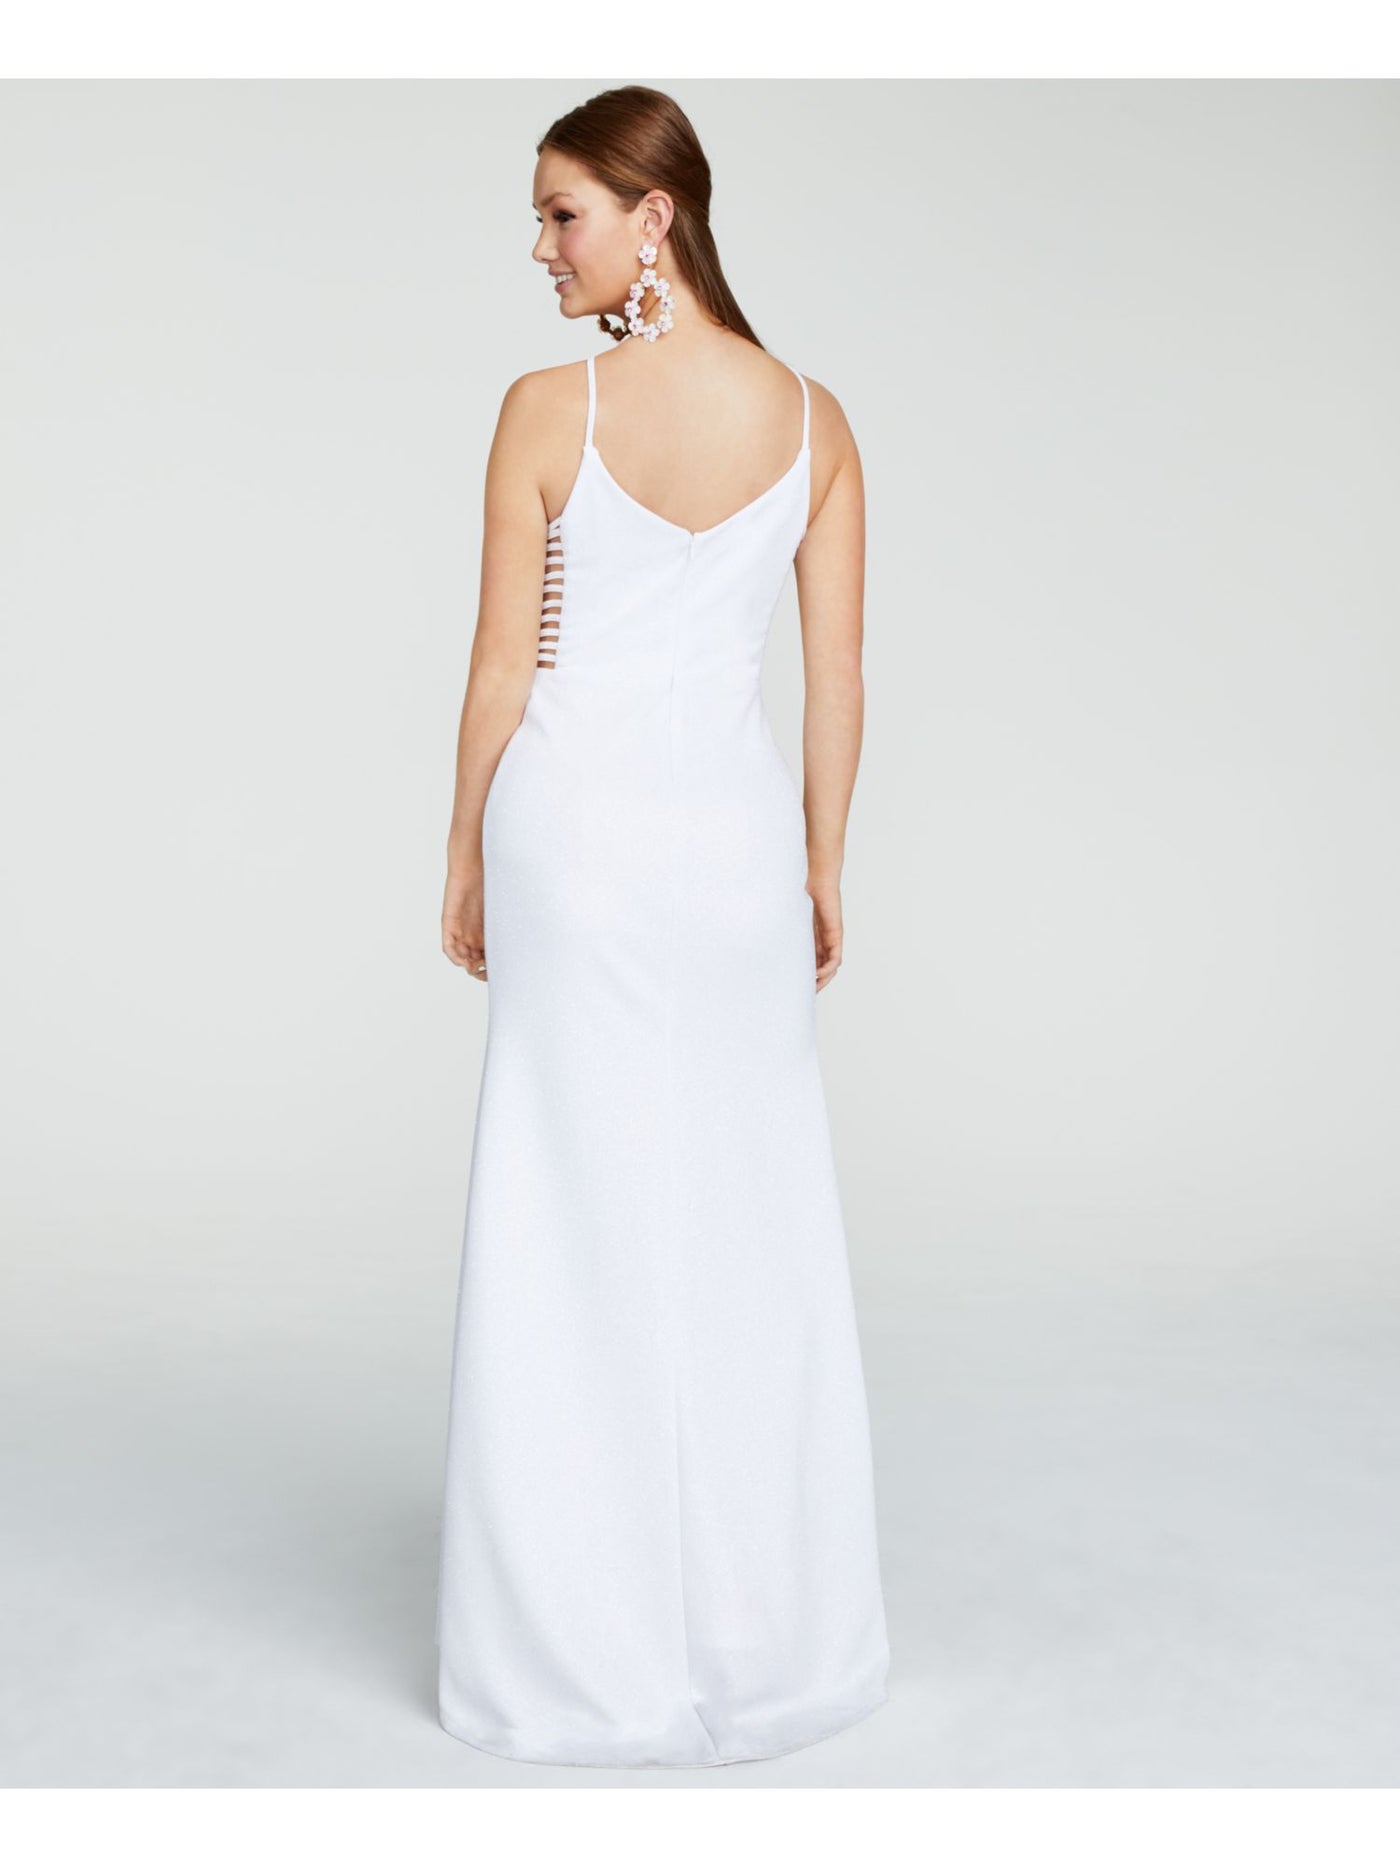 JUMP APPAREL Womens White Glitter Cut Out Sleeveless Halter Full-Length Formal Fit + Flare Dress Juniors 3\4